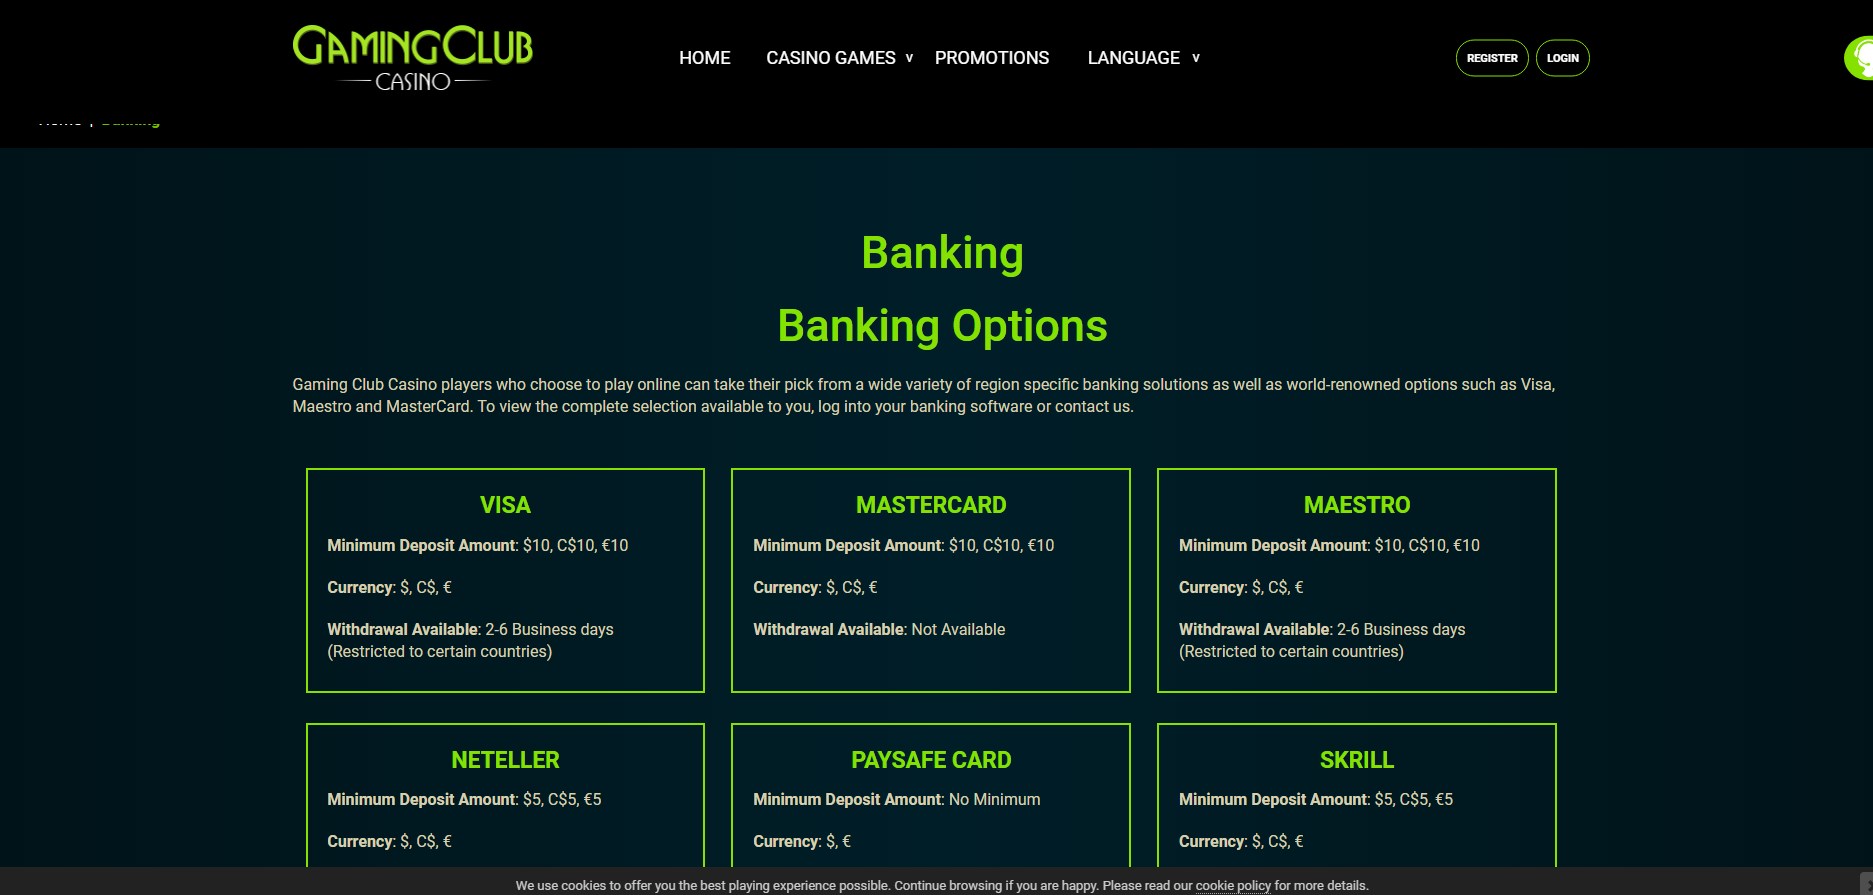 Gaming Club Casino Payment Methods